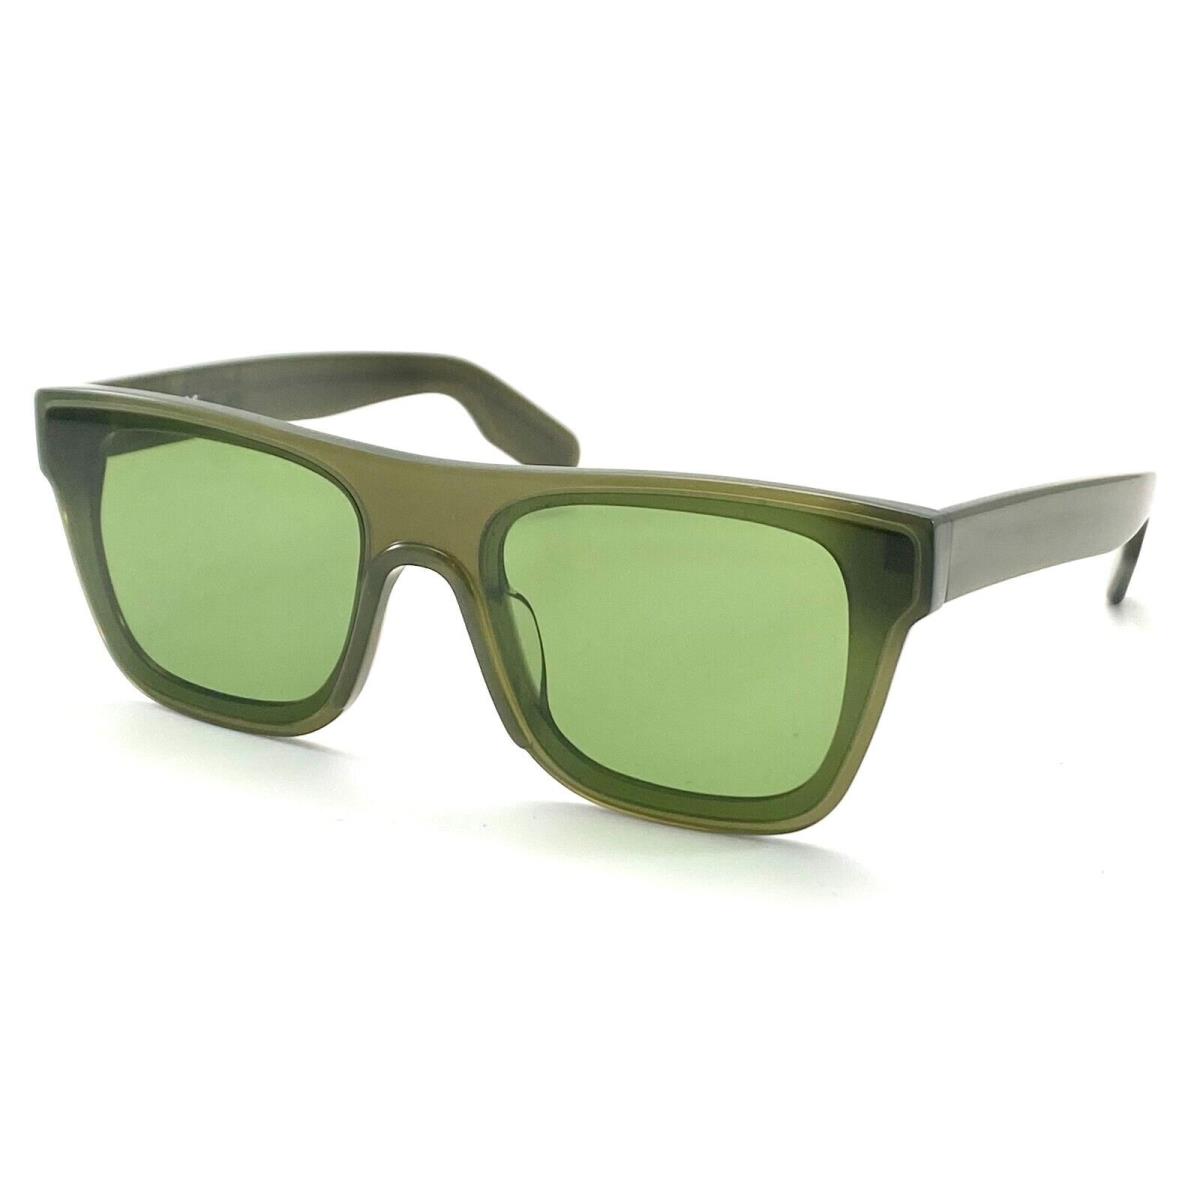 Kenzo Paris KZ40018U 96N Green Sunglasses 63-18 150 W/case